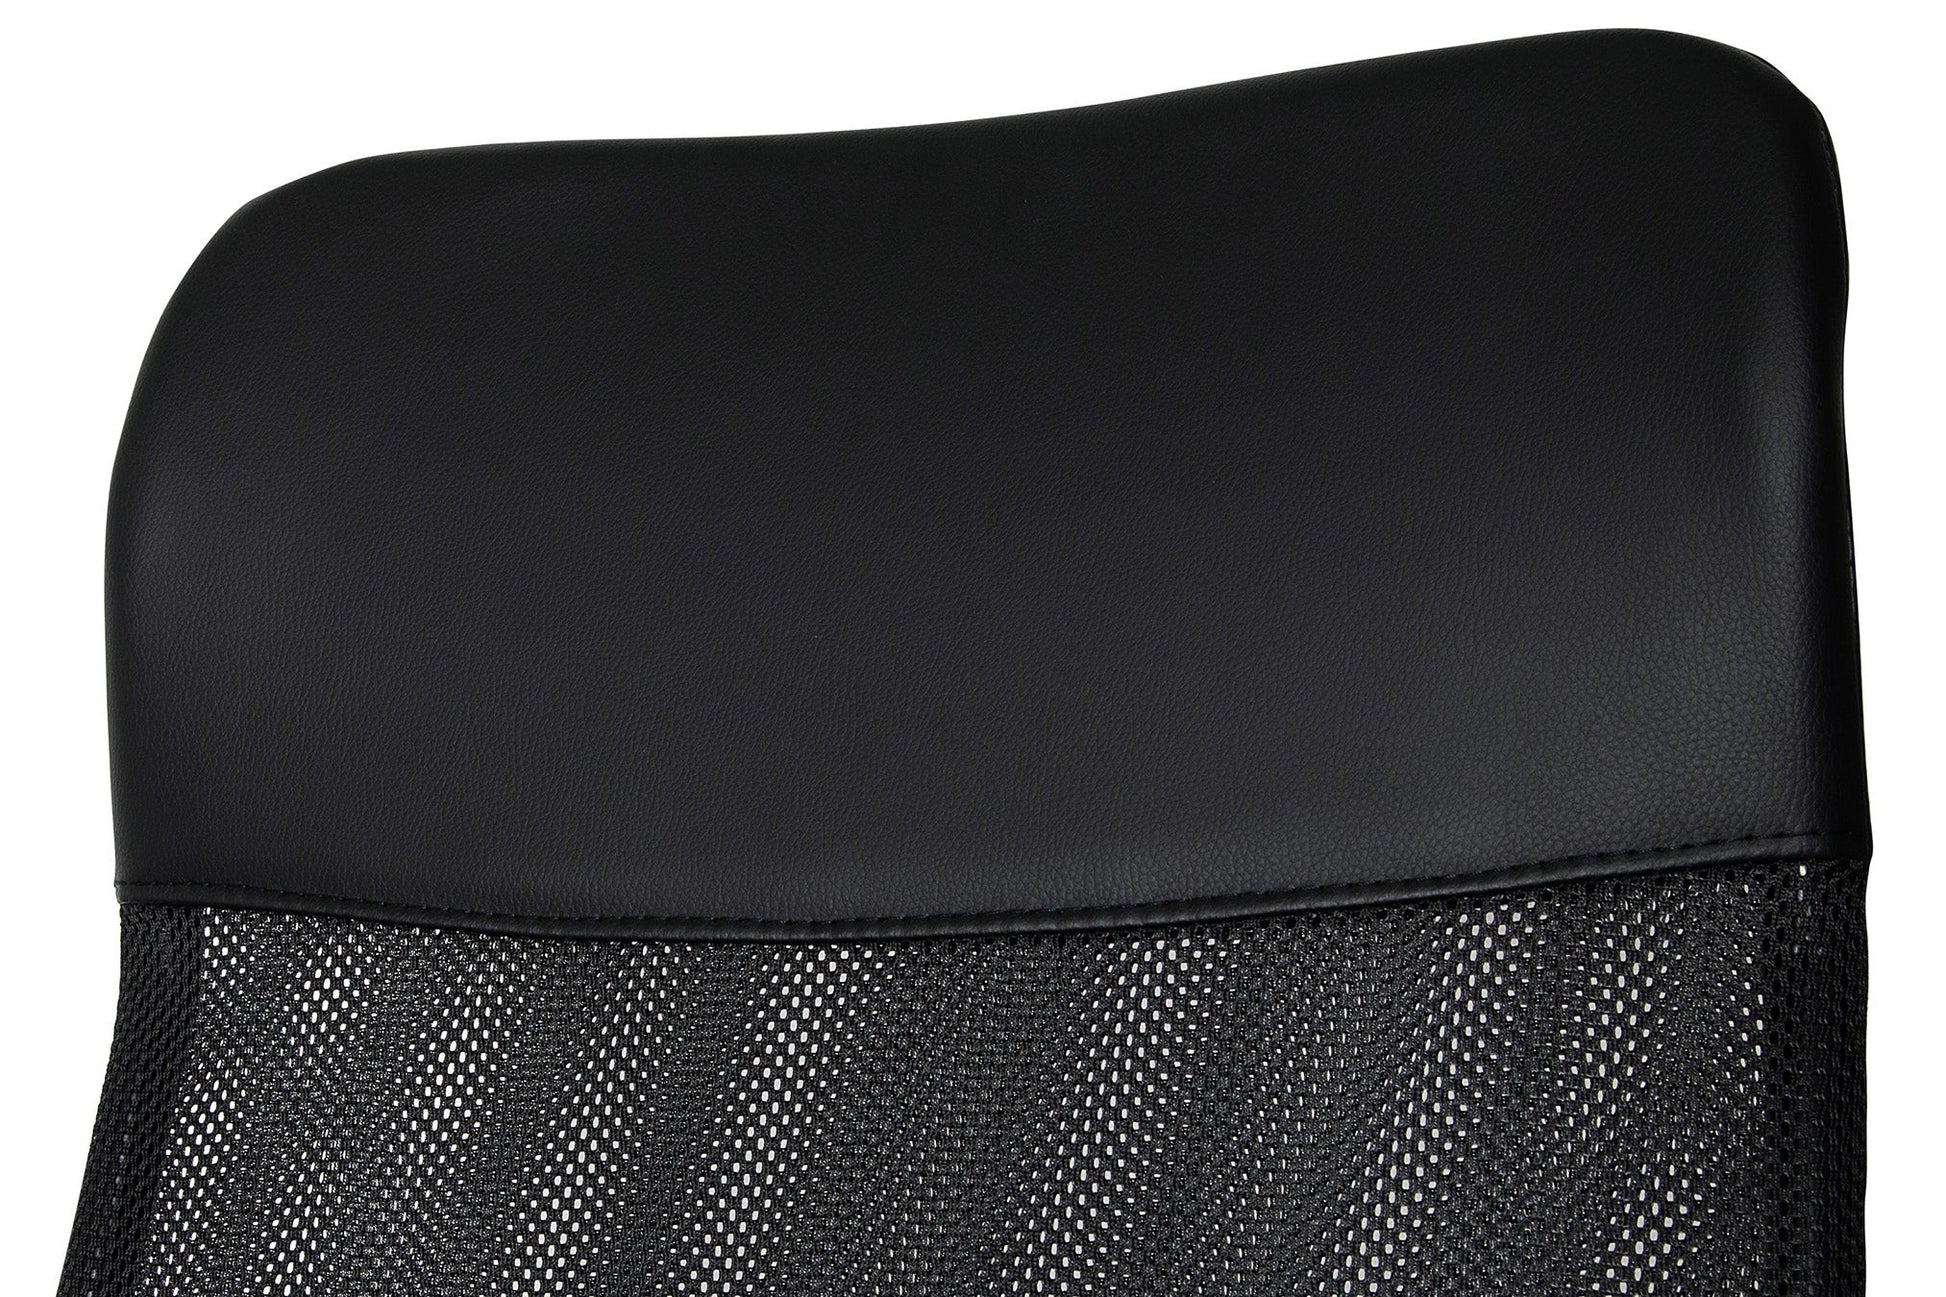 ProperAV Ergonomic High-Back Leatherette Mesh Fabric Office Chair - maplin.co.uk